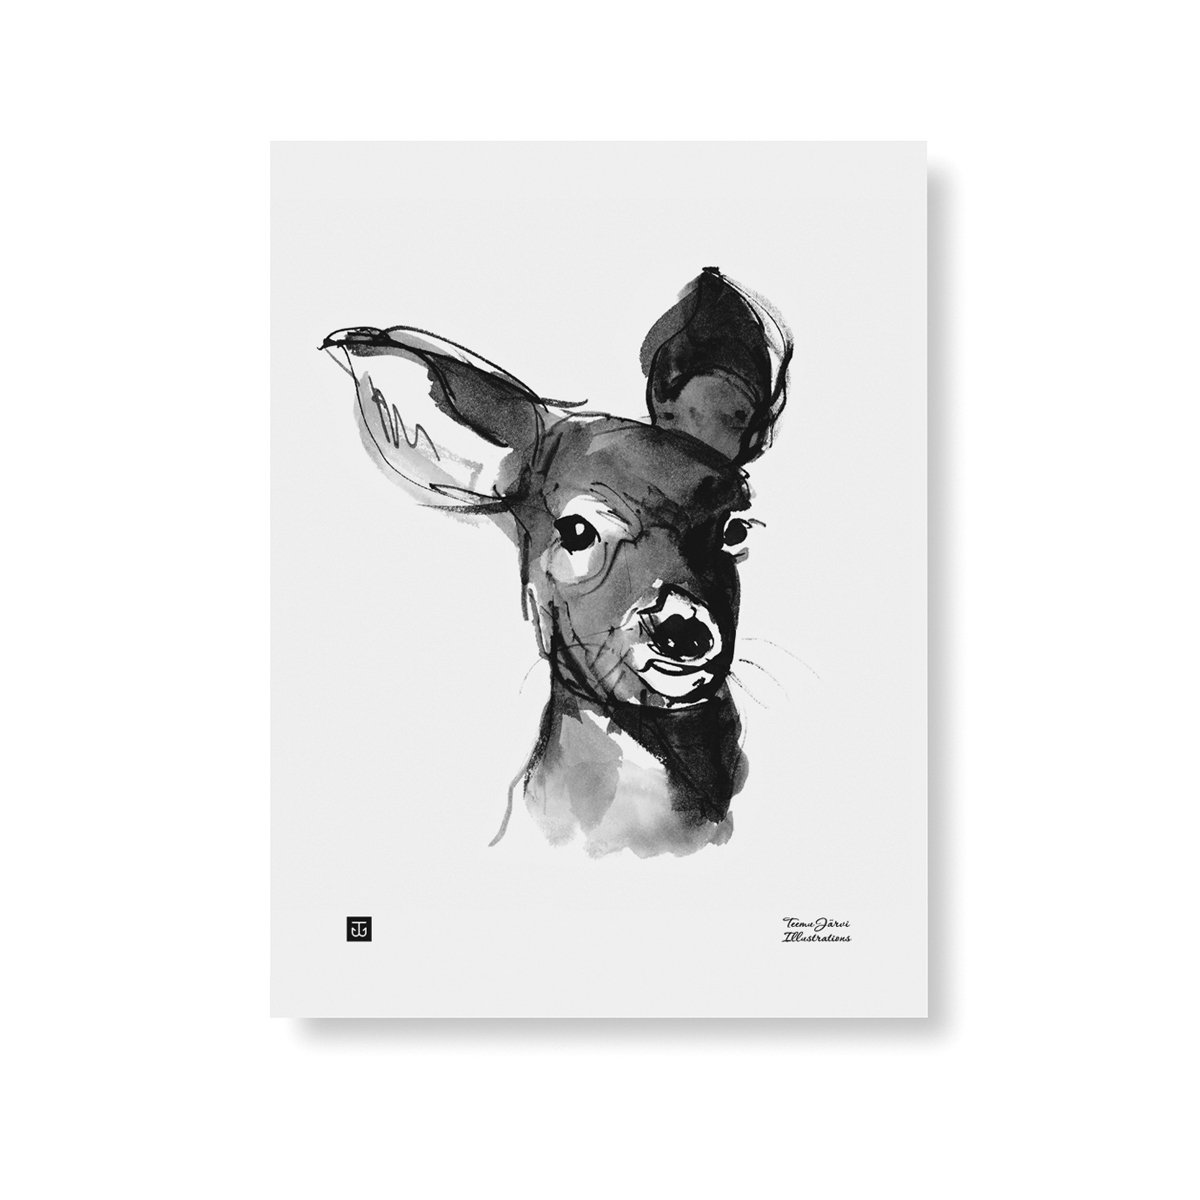 Charming deer art print